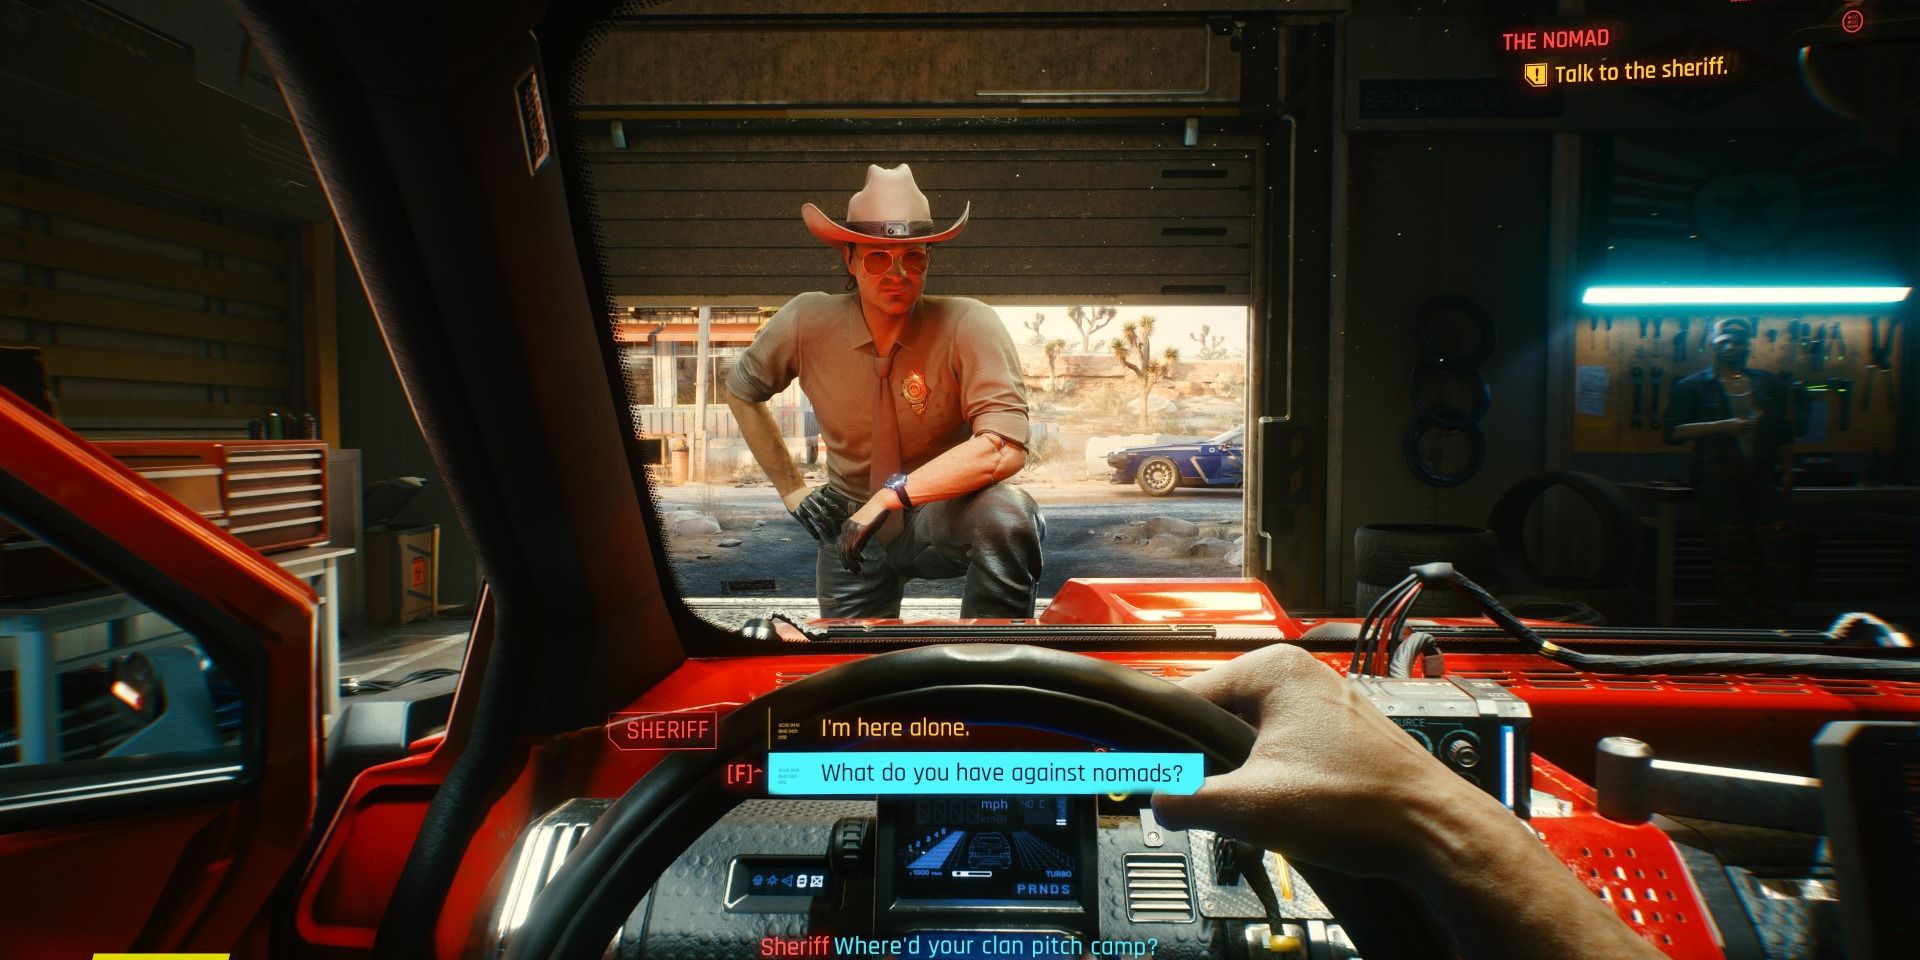 Cyberpunk Conversation With Sheriff